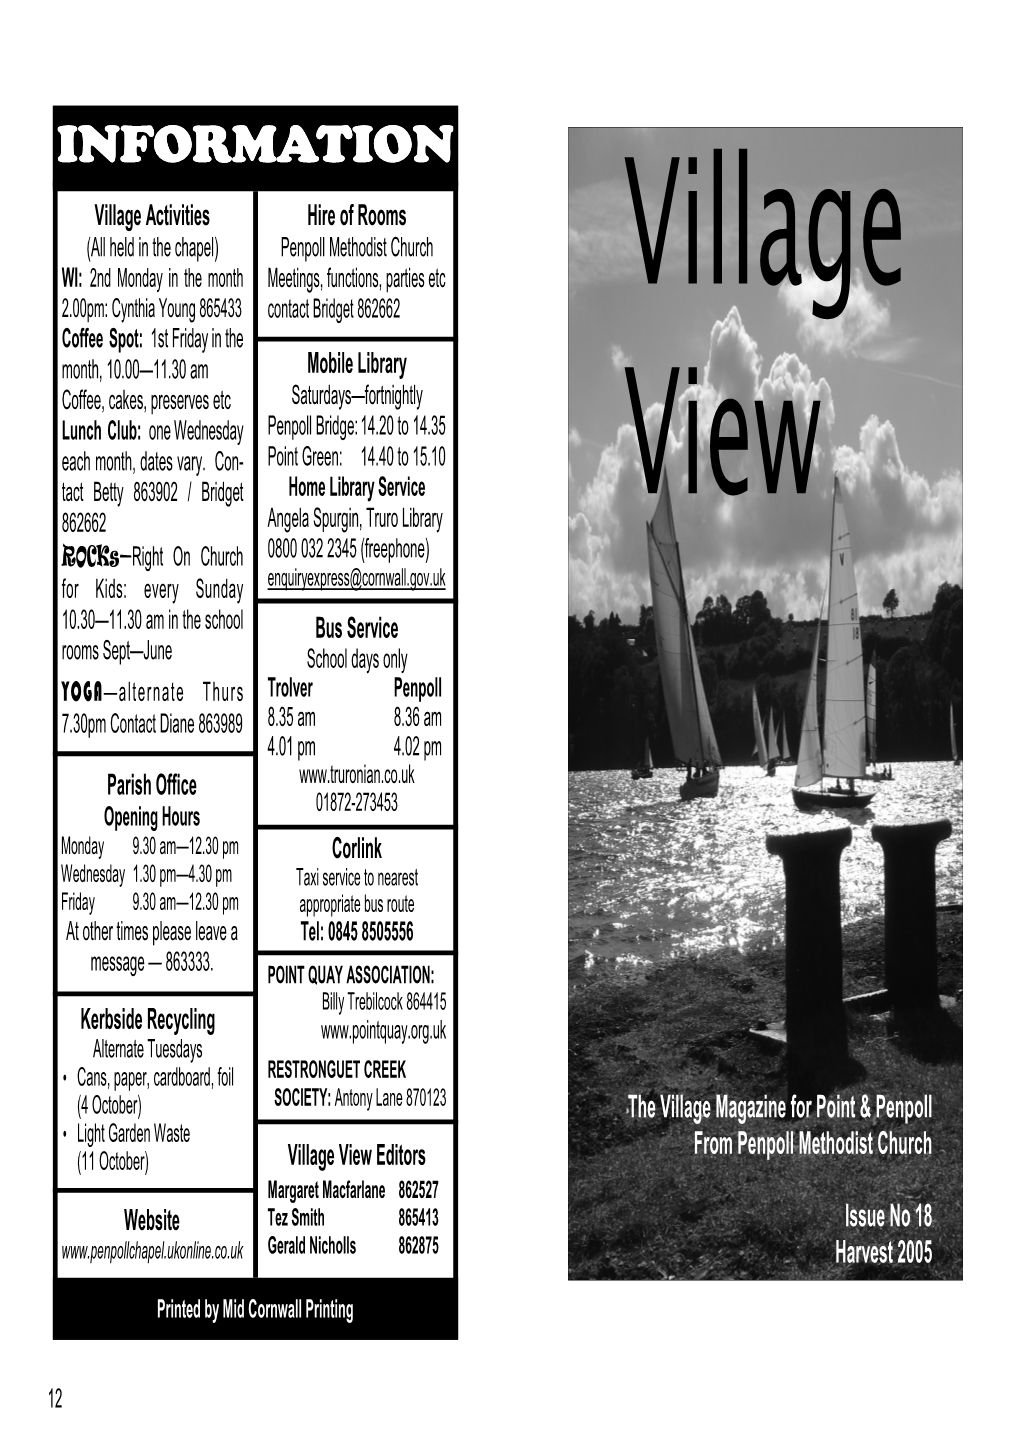 Village View Editors